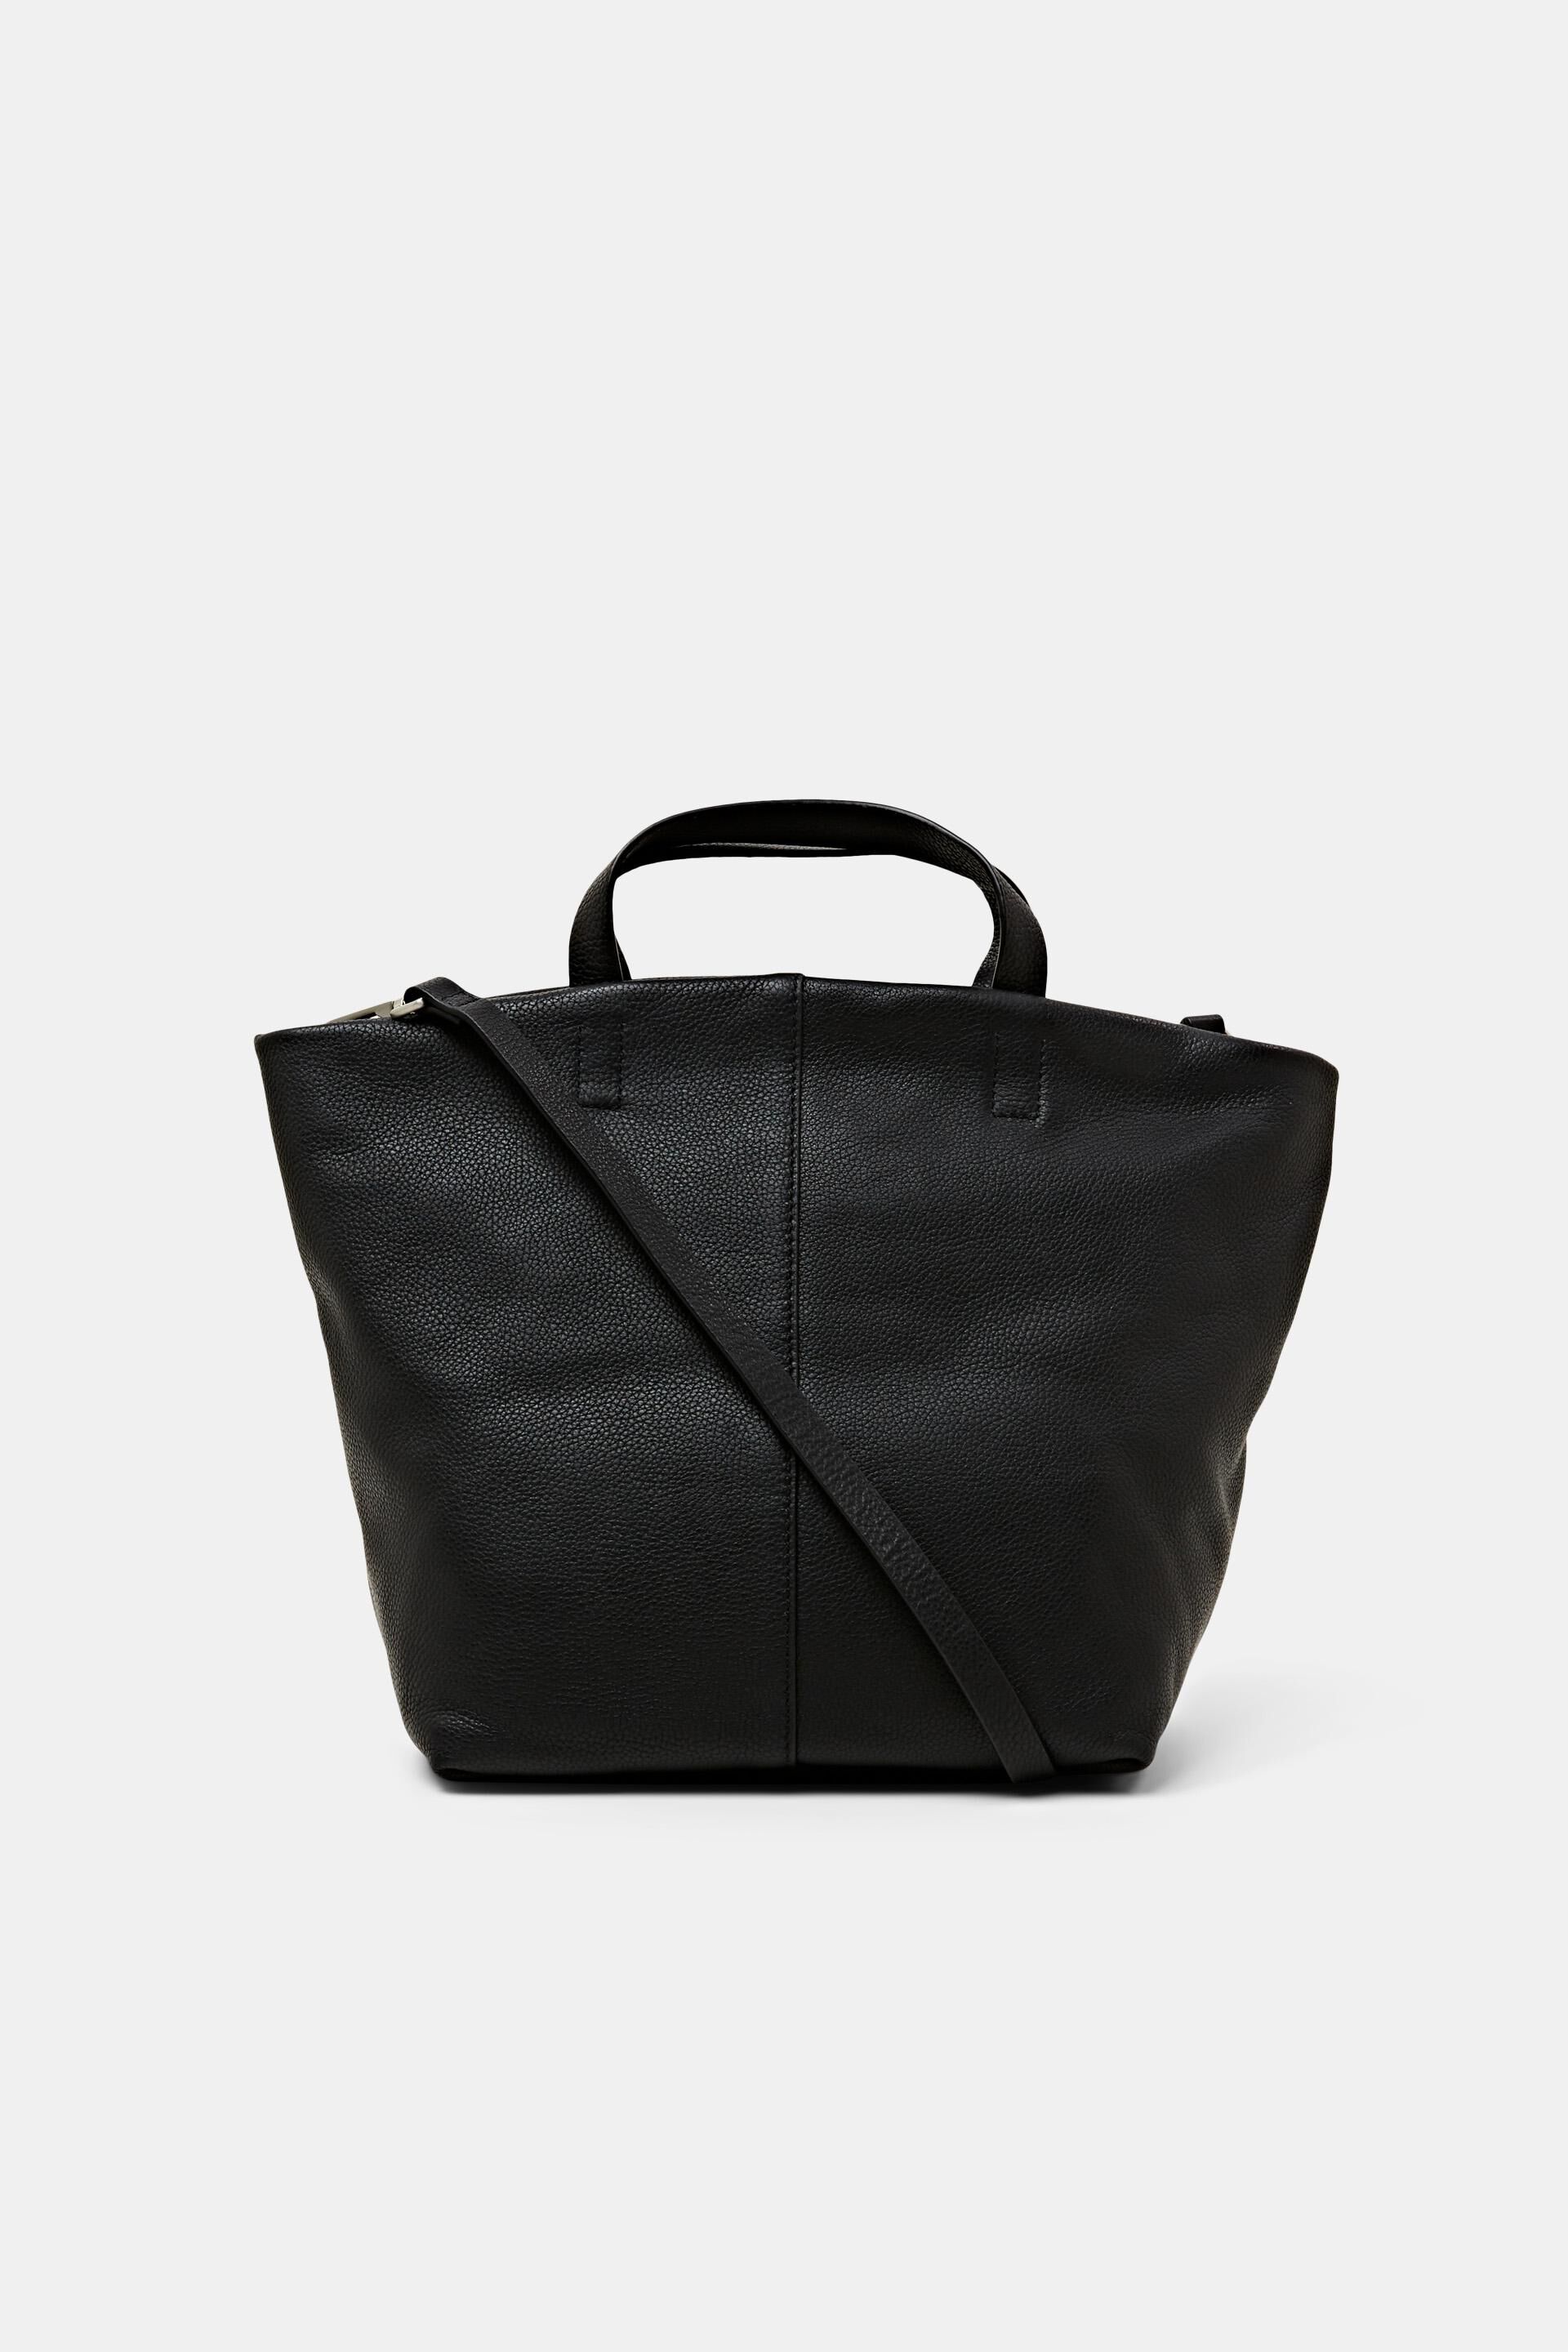 Esprit leather Bags